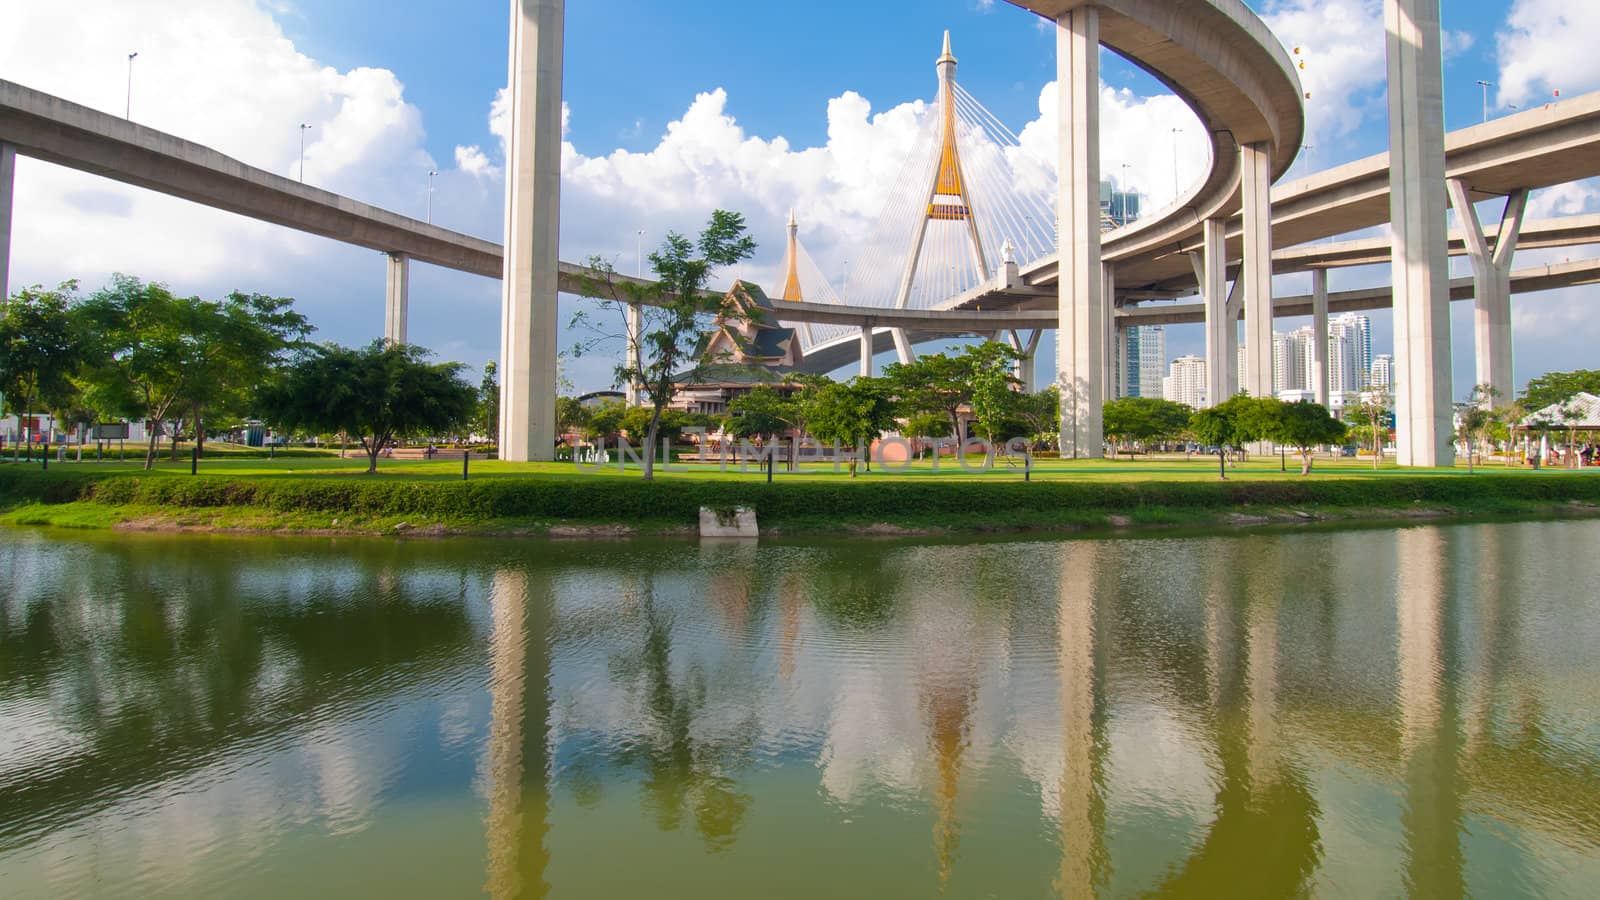 Bhumibol Bridge in Thailand,The bridge crosses the Chao Phraya River twice.